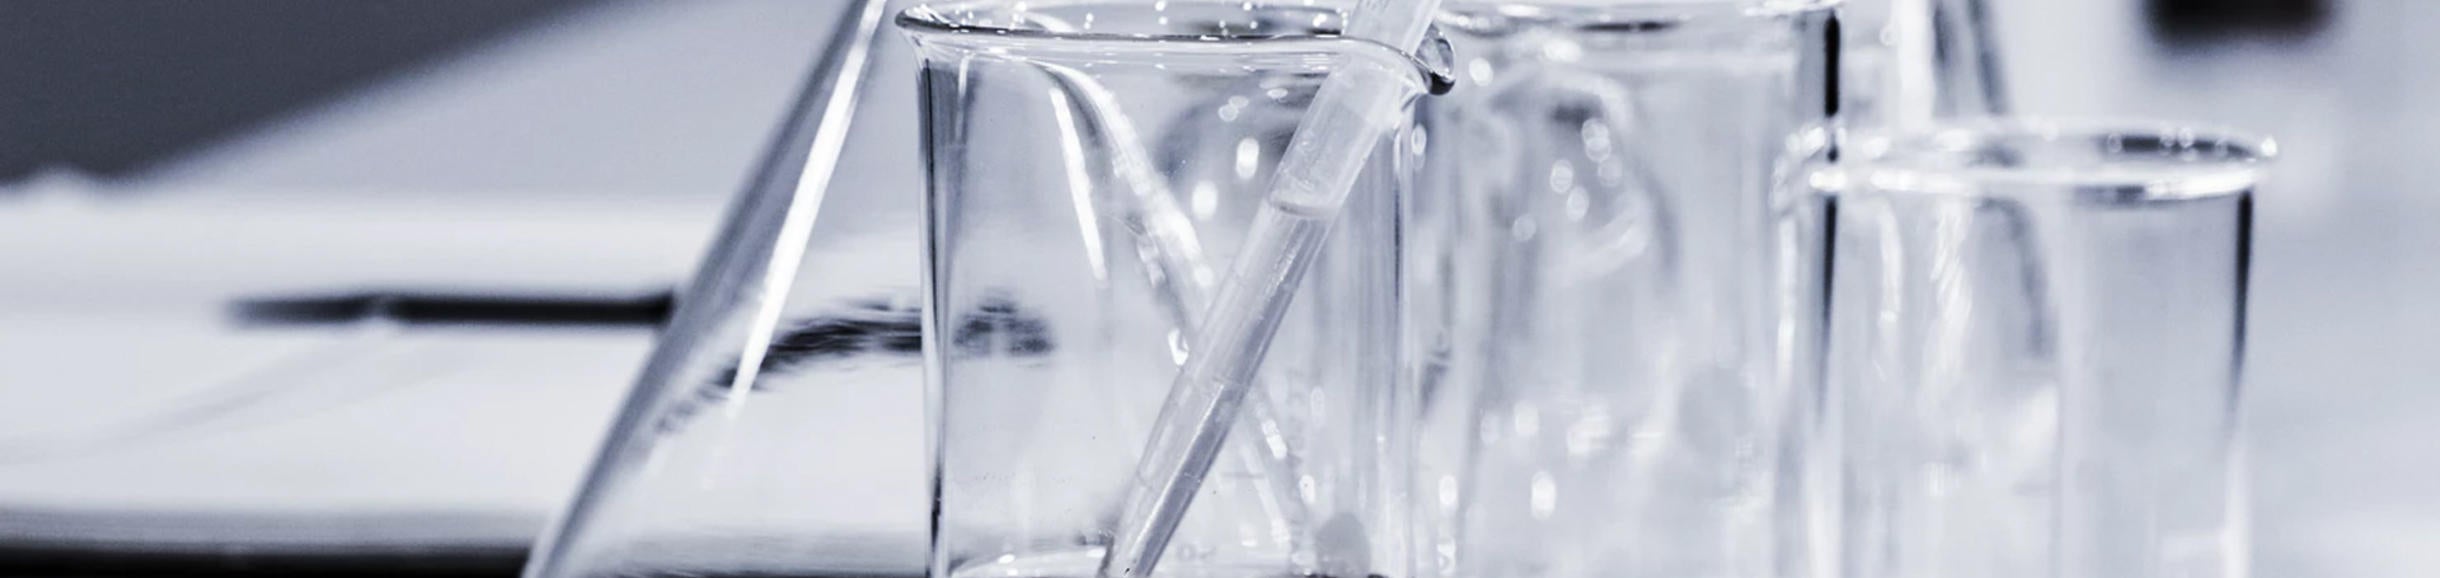 Unsplash- Glass Lab Dishes